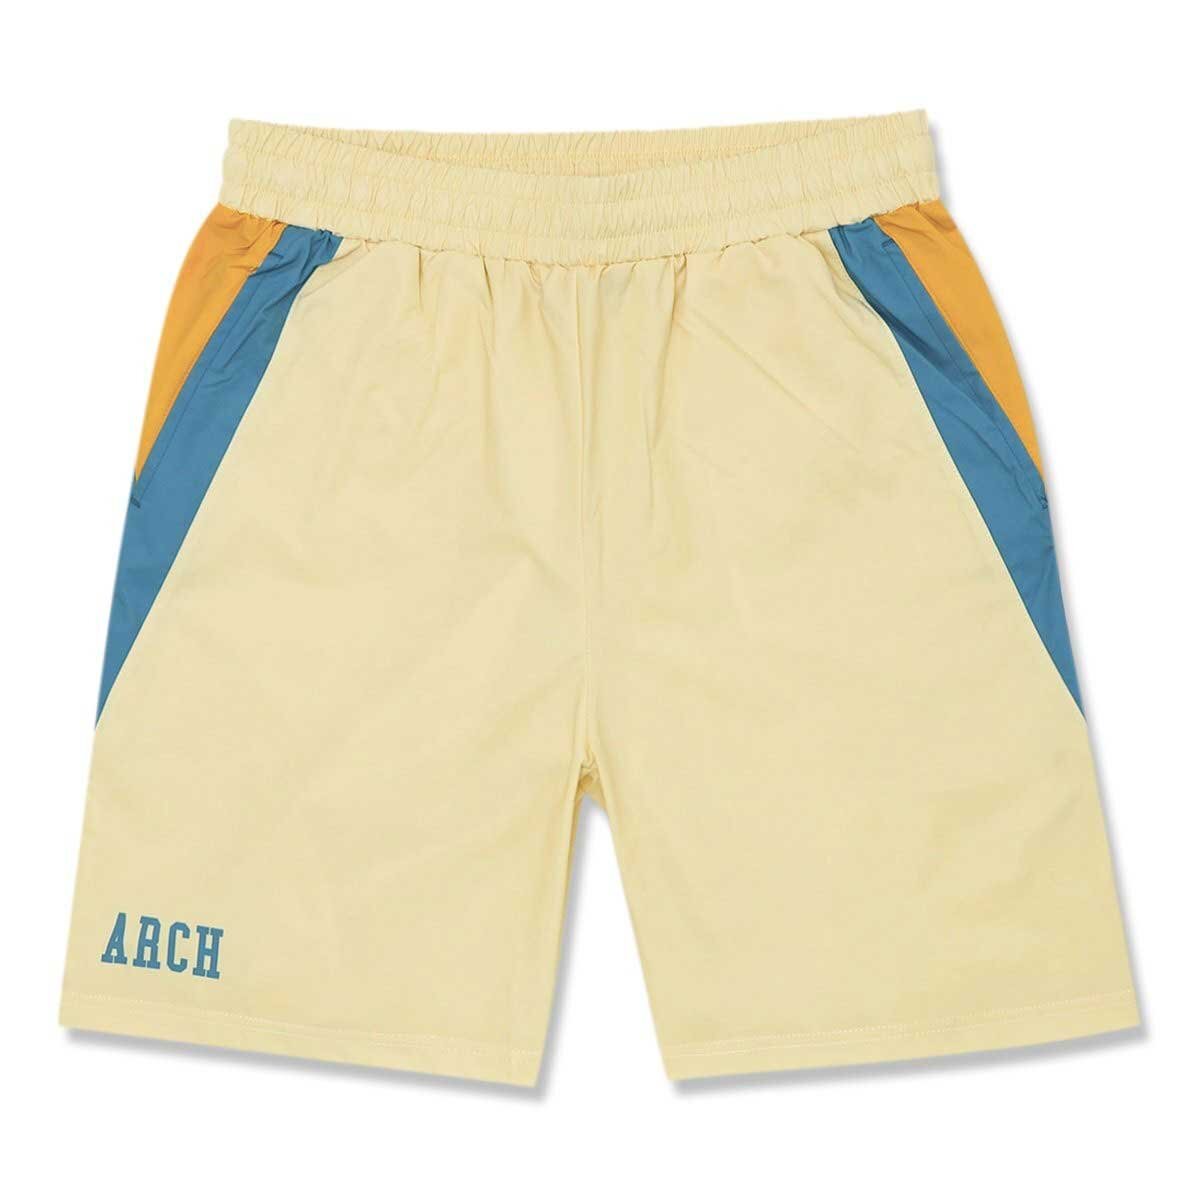 1563493-Arch/Arch side colors shorts バスケットショーツ ショートパンツ/L